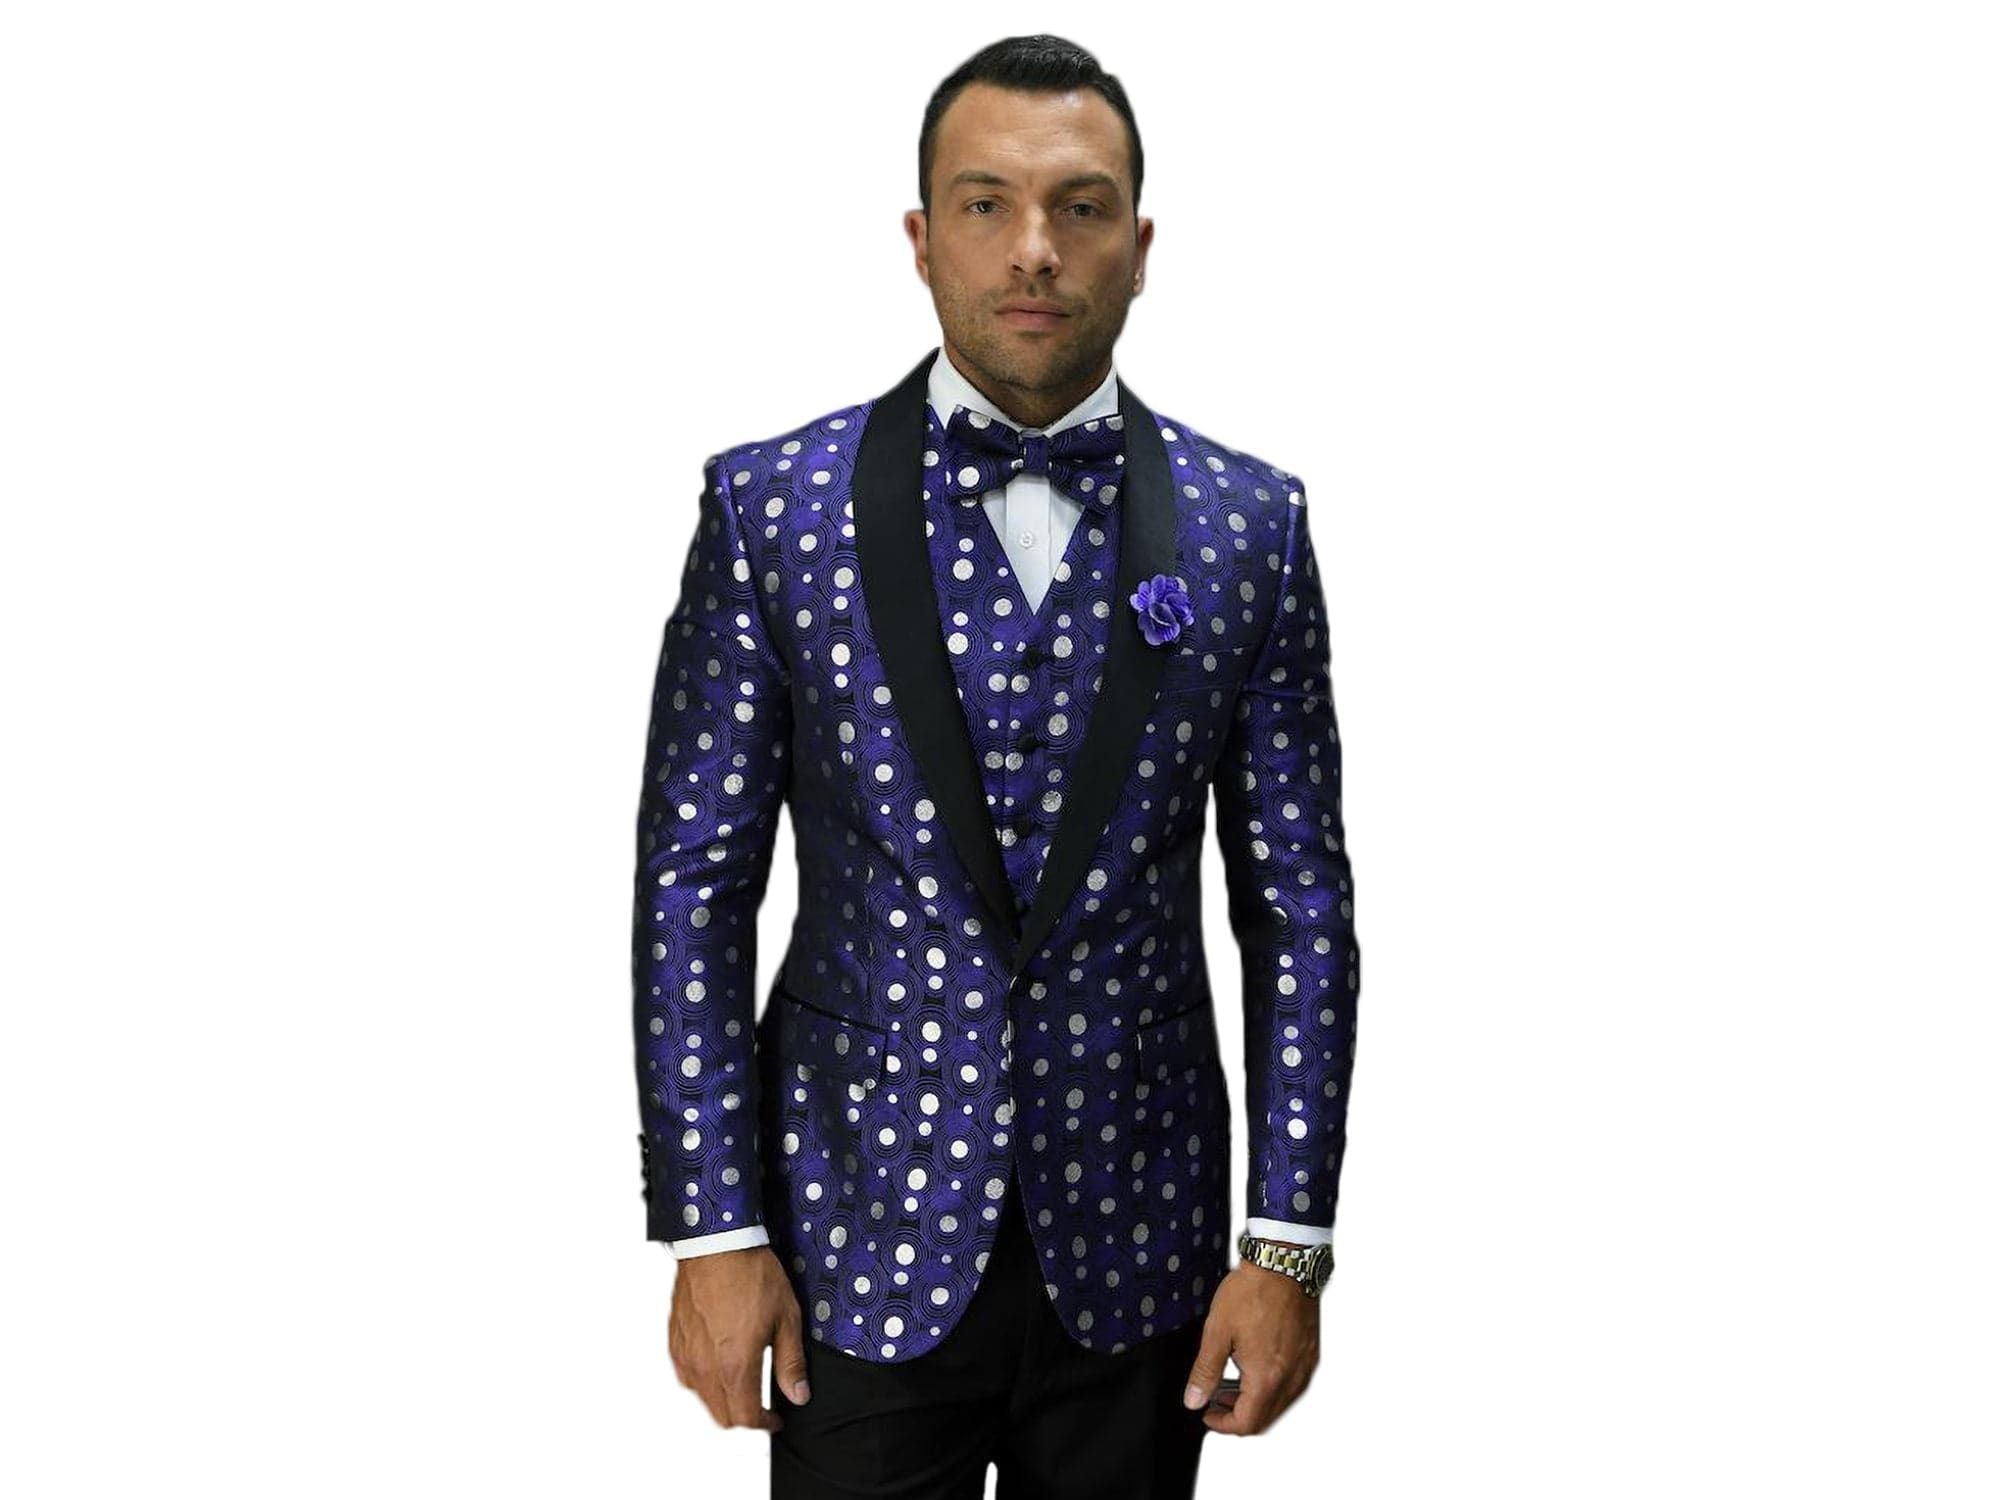 Purple With Silver Dot Dinner Jacket Tuxedo Rental - Rainwater's Men's Clothing and Tuxedo Rental